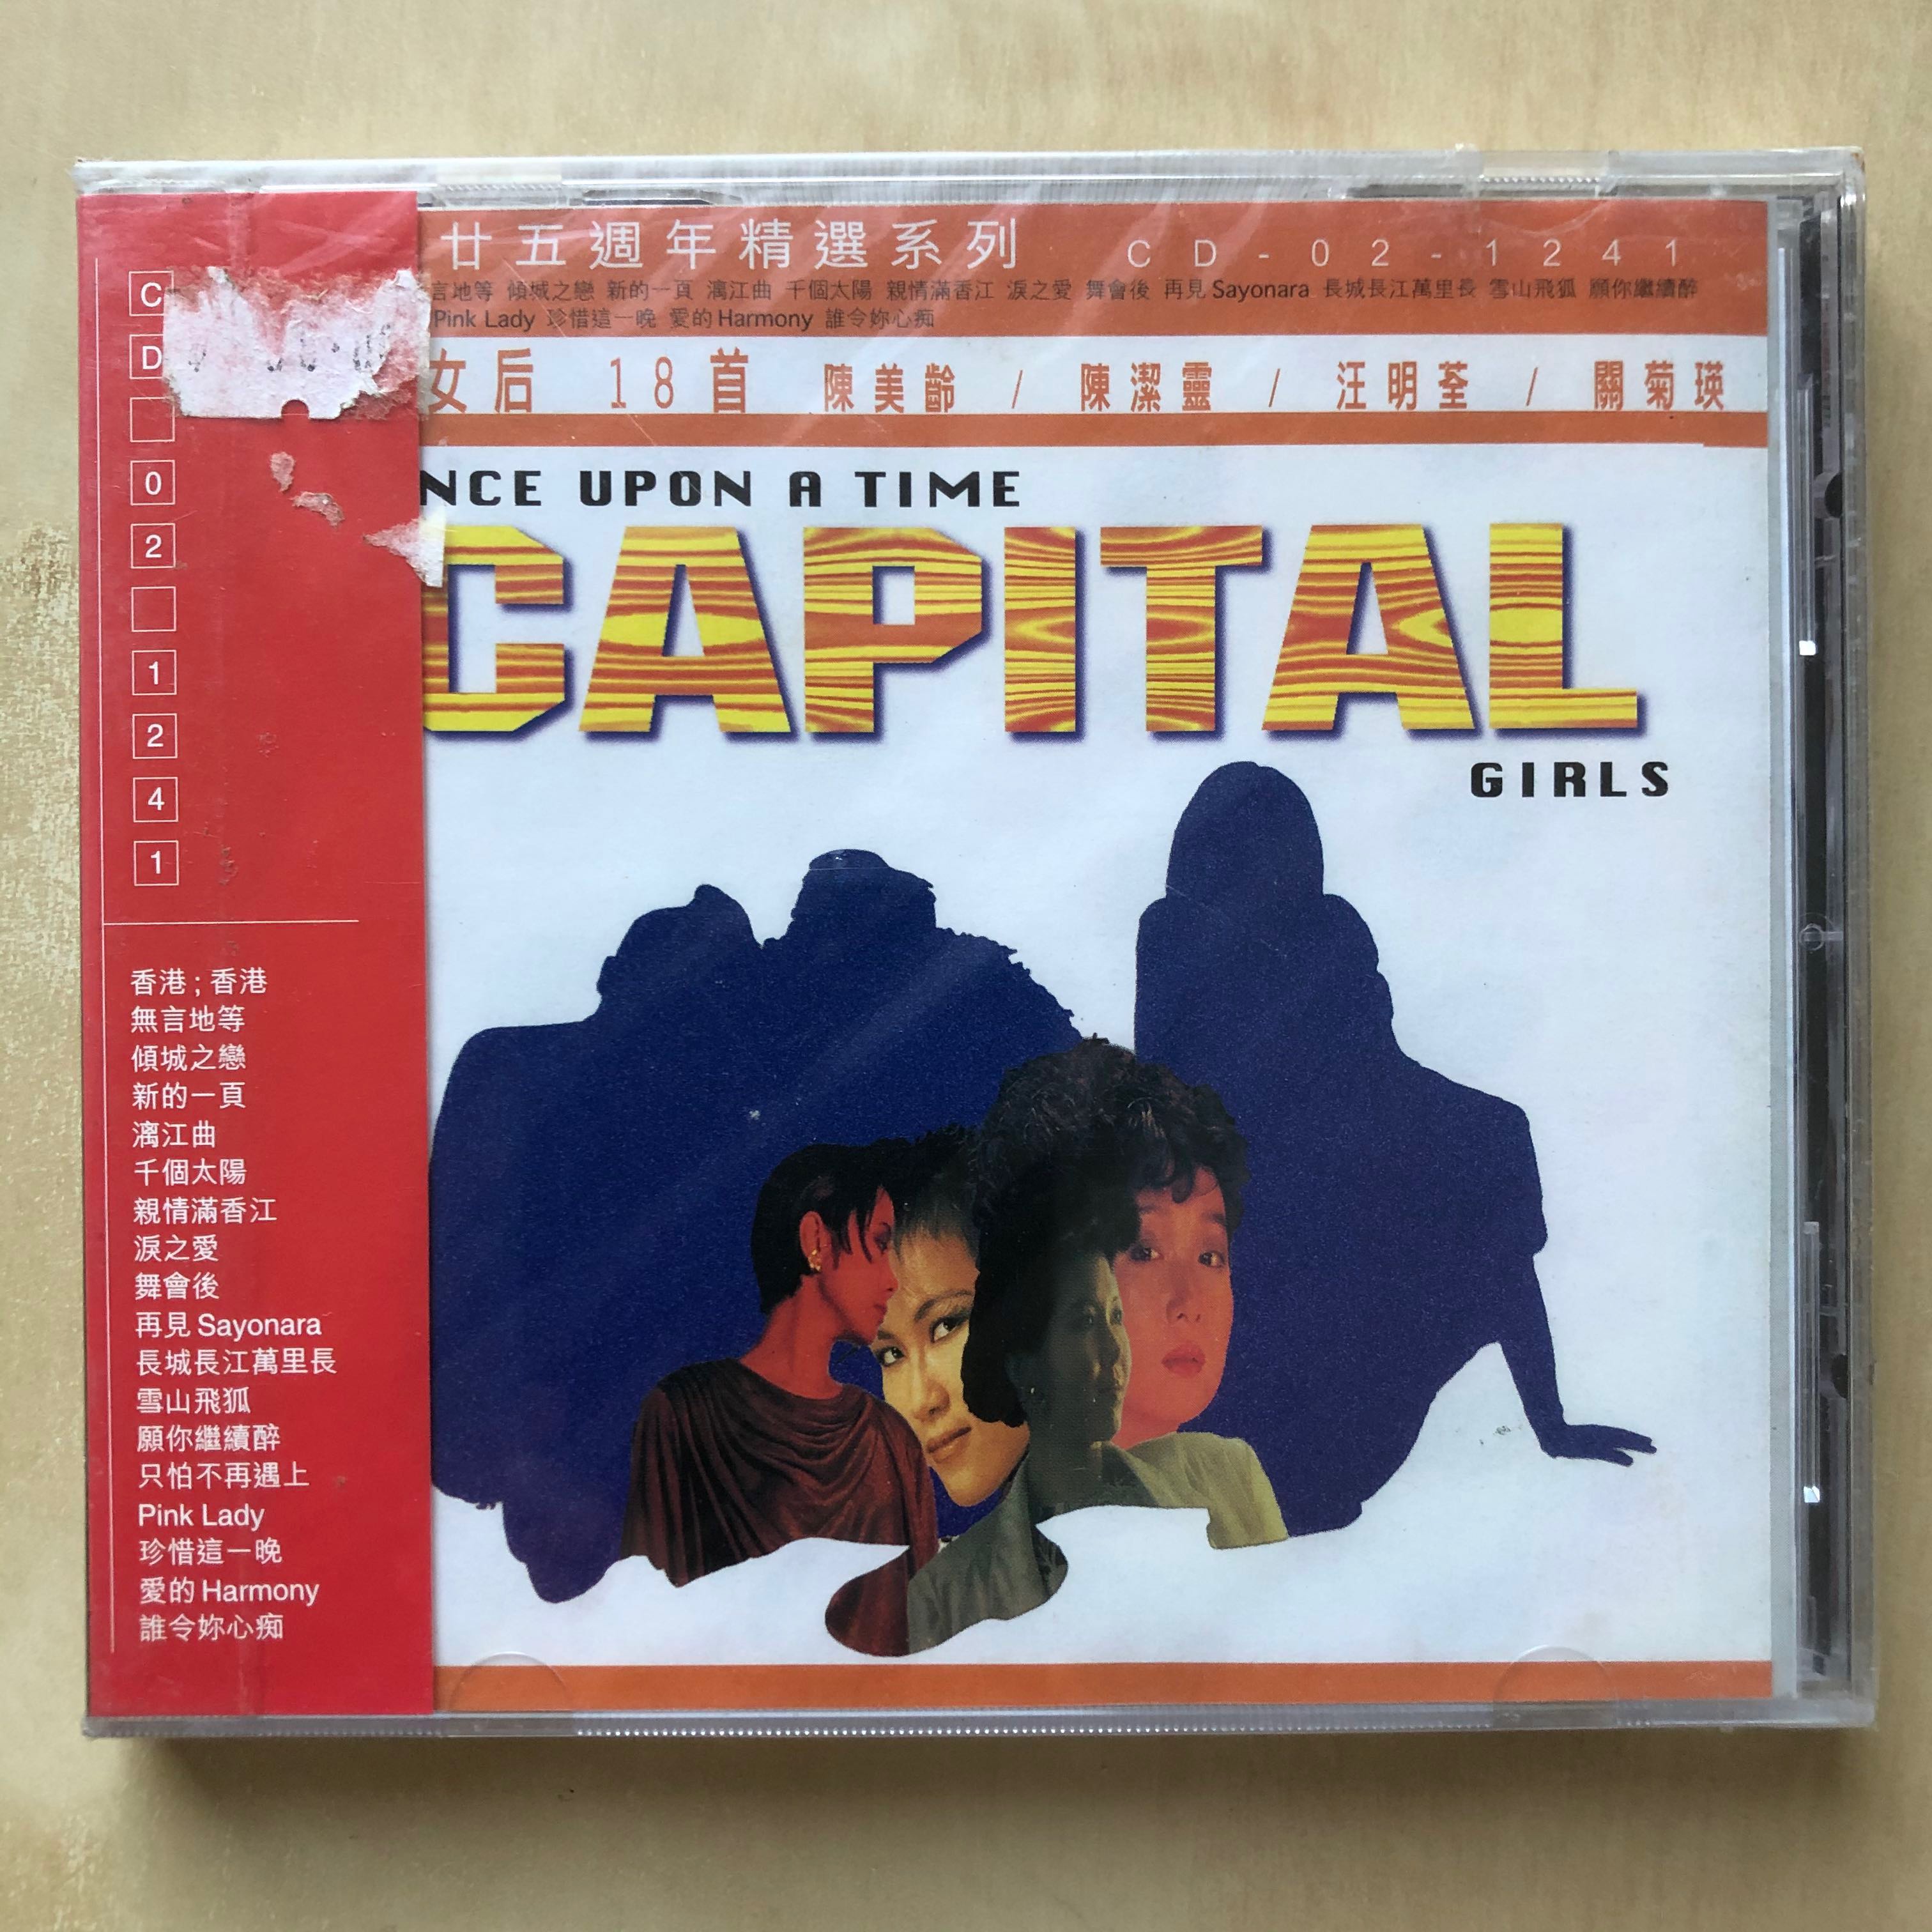 CD丨華星25周年精選系列四大女后18首/ Once Upon A Time Capital